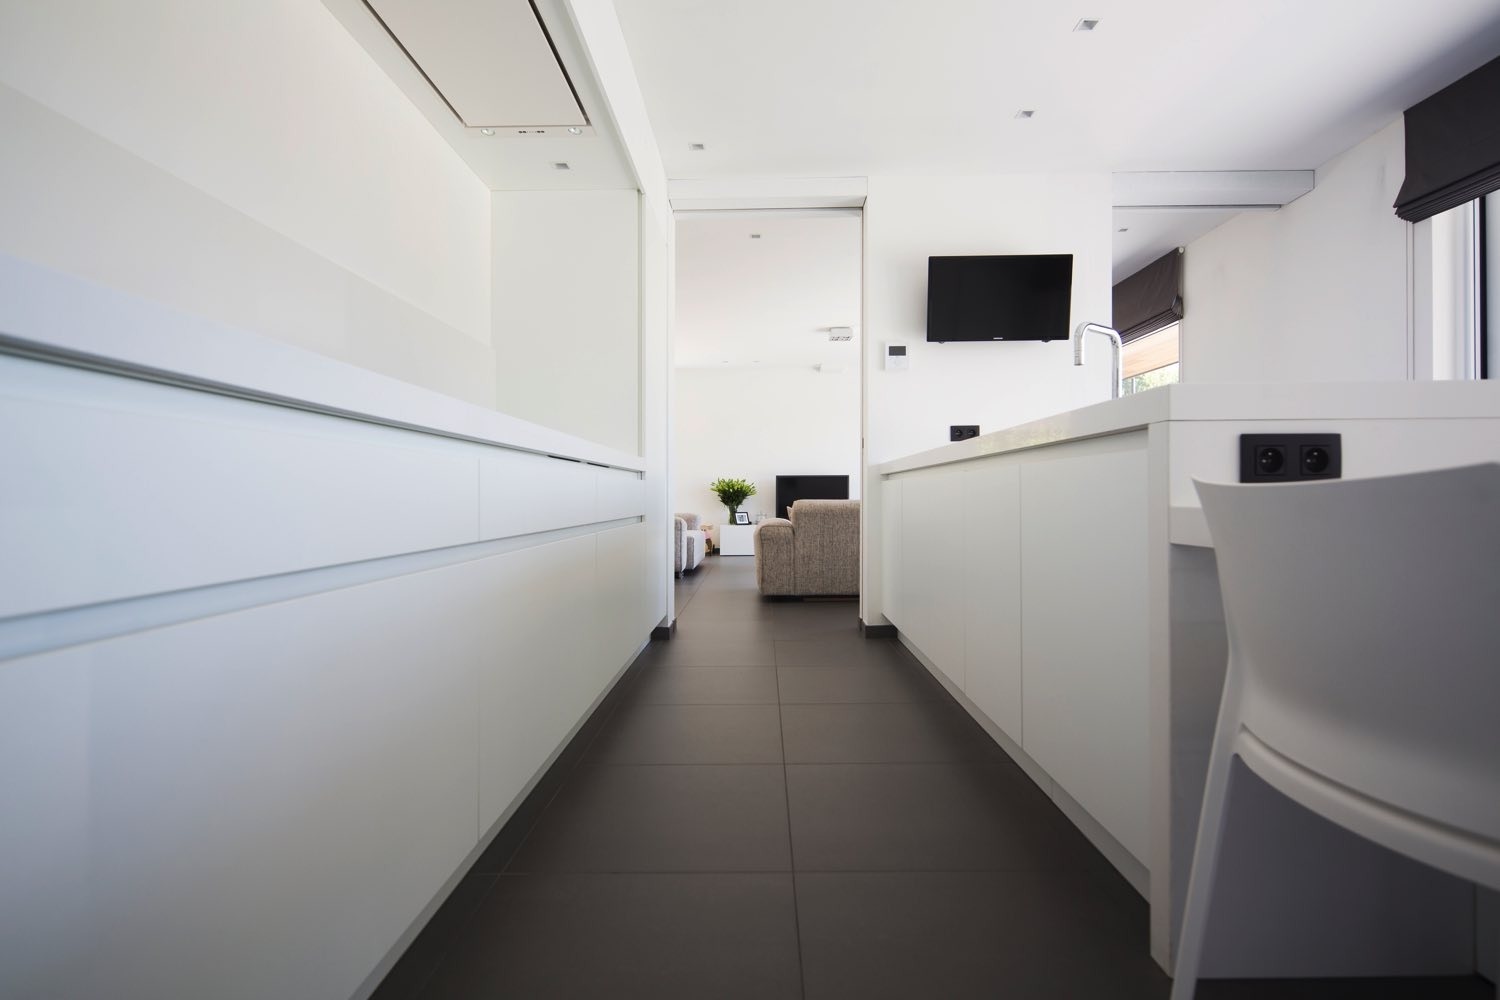 Modern interieur met witte keukenkasten